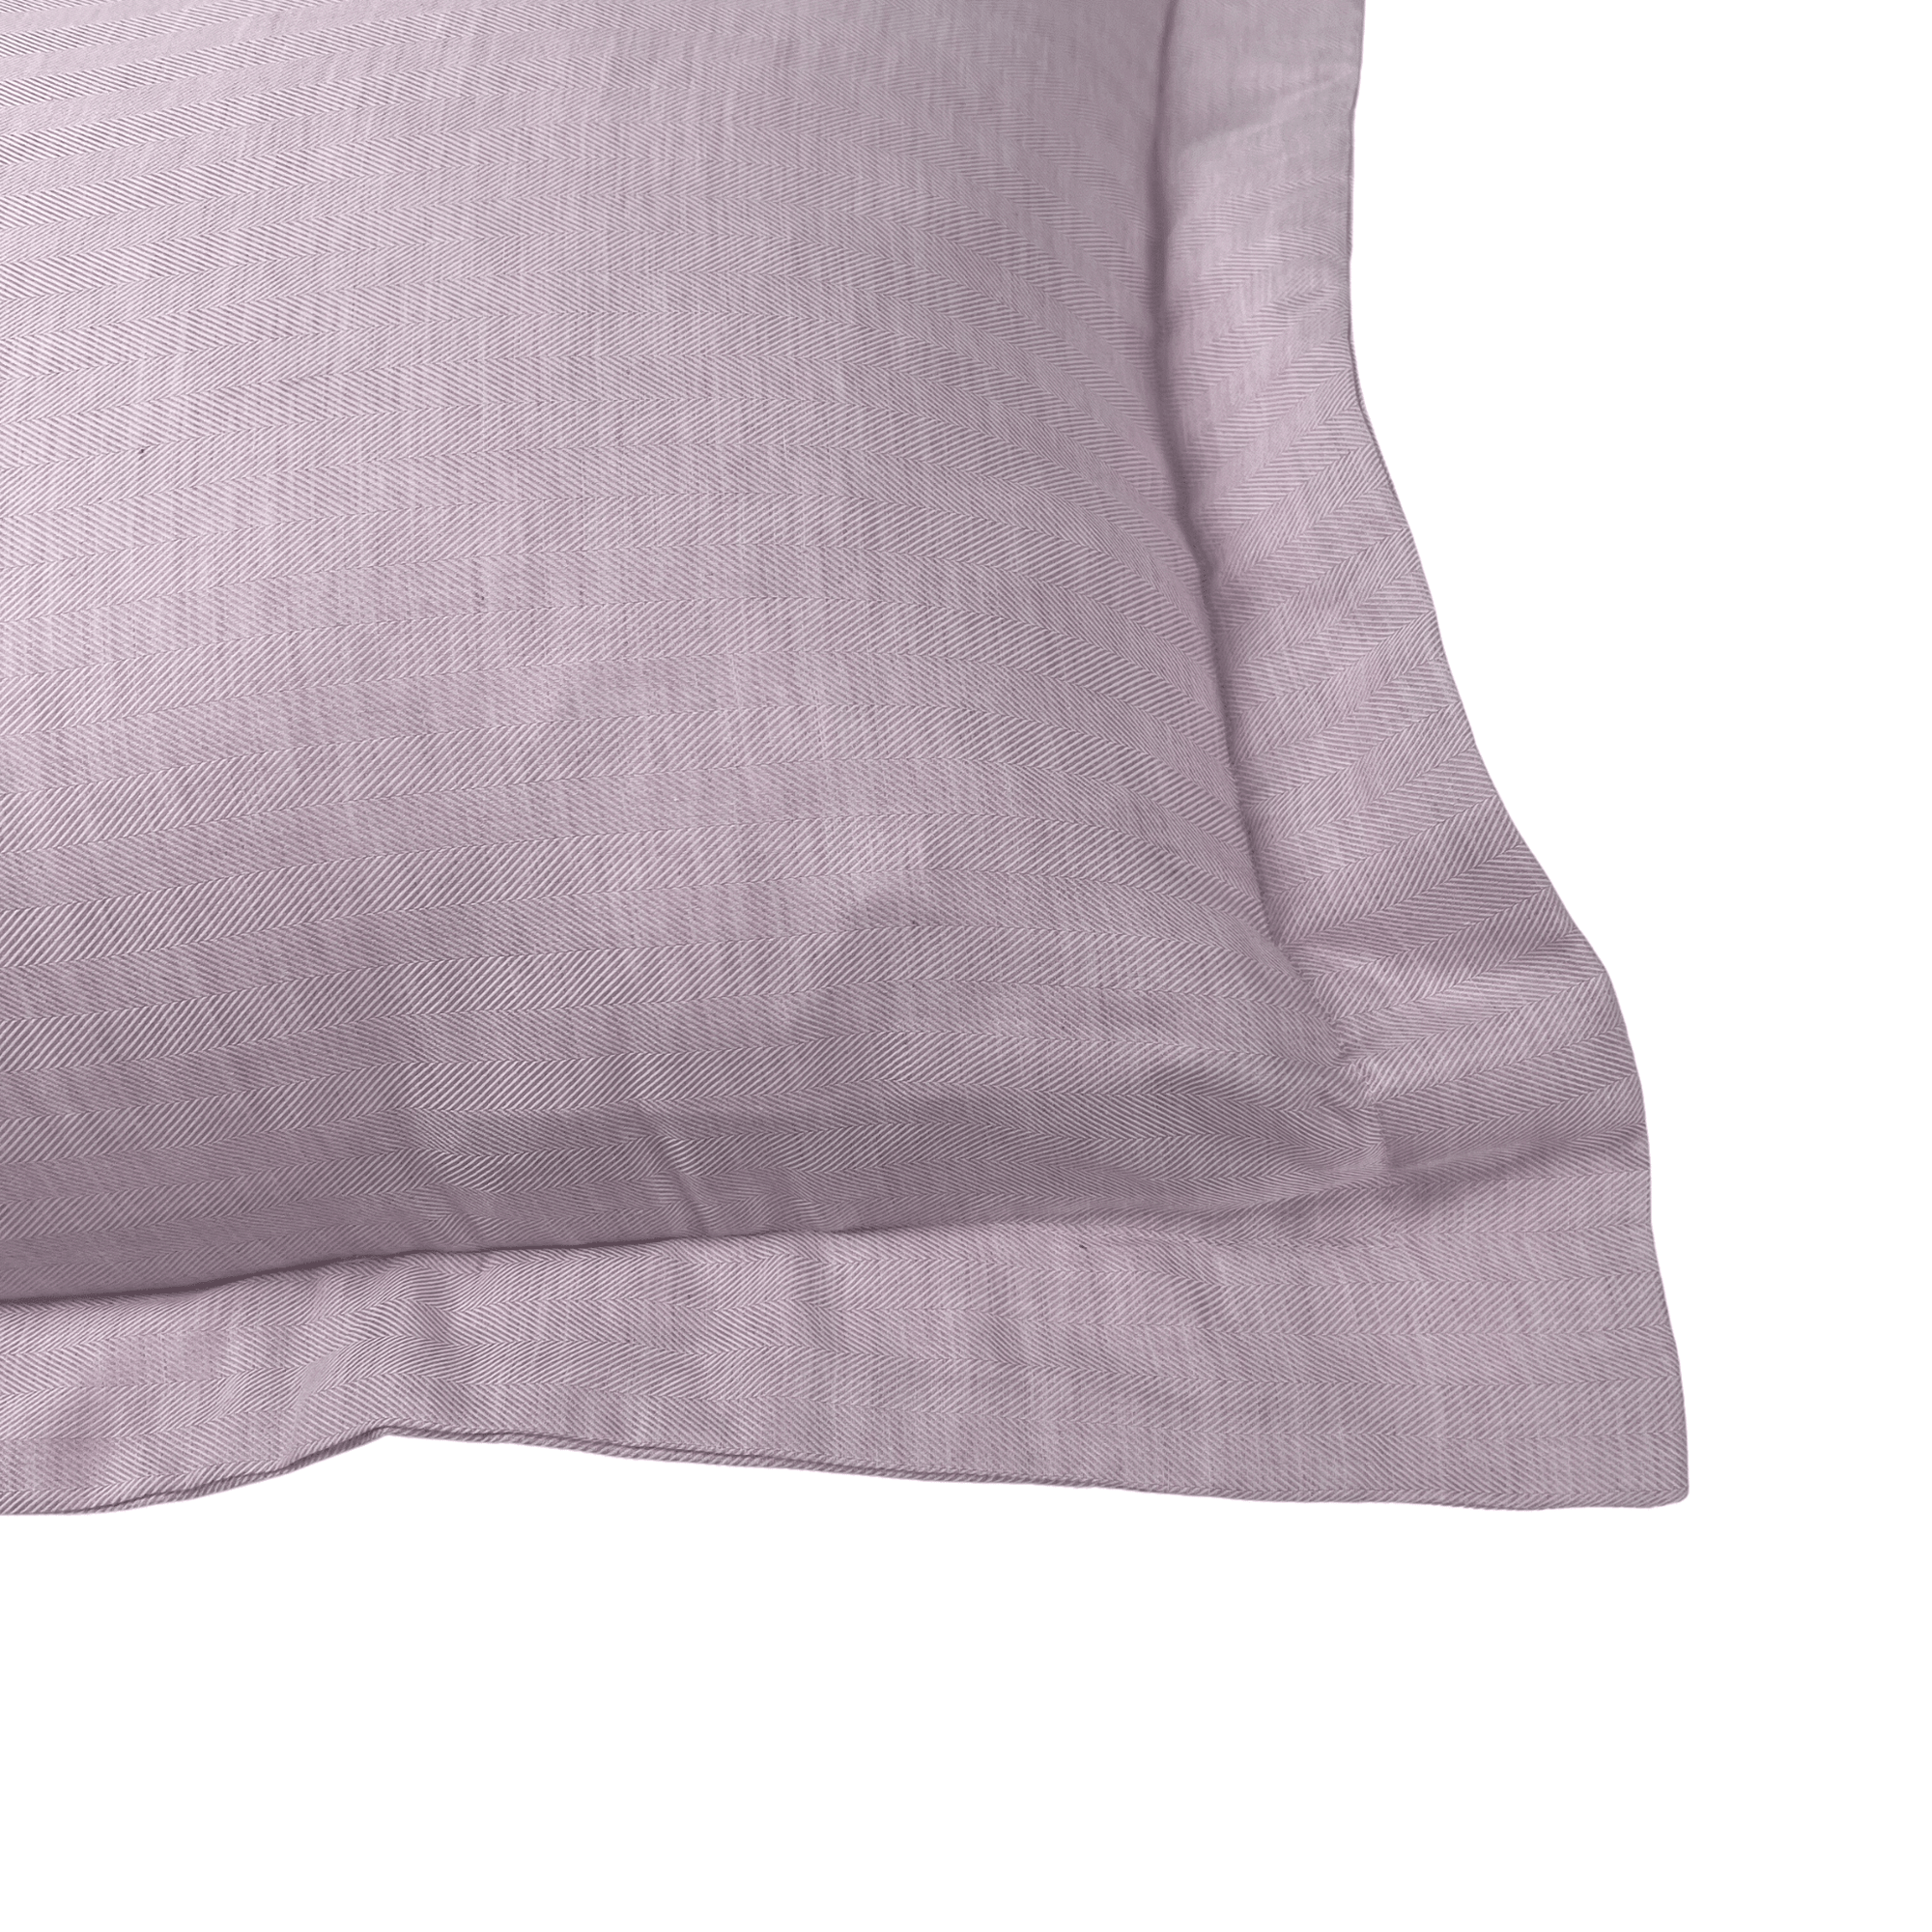 Beddley Pink Sham - Herringbone with three sided open easycare zipper